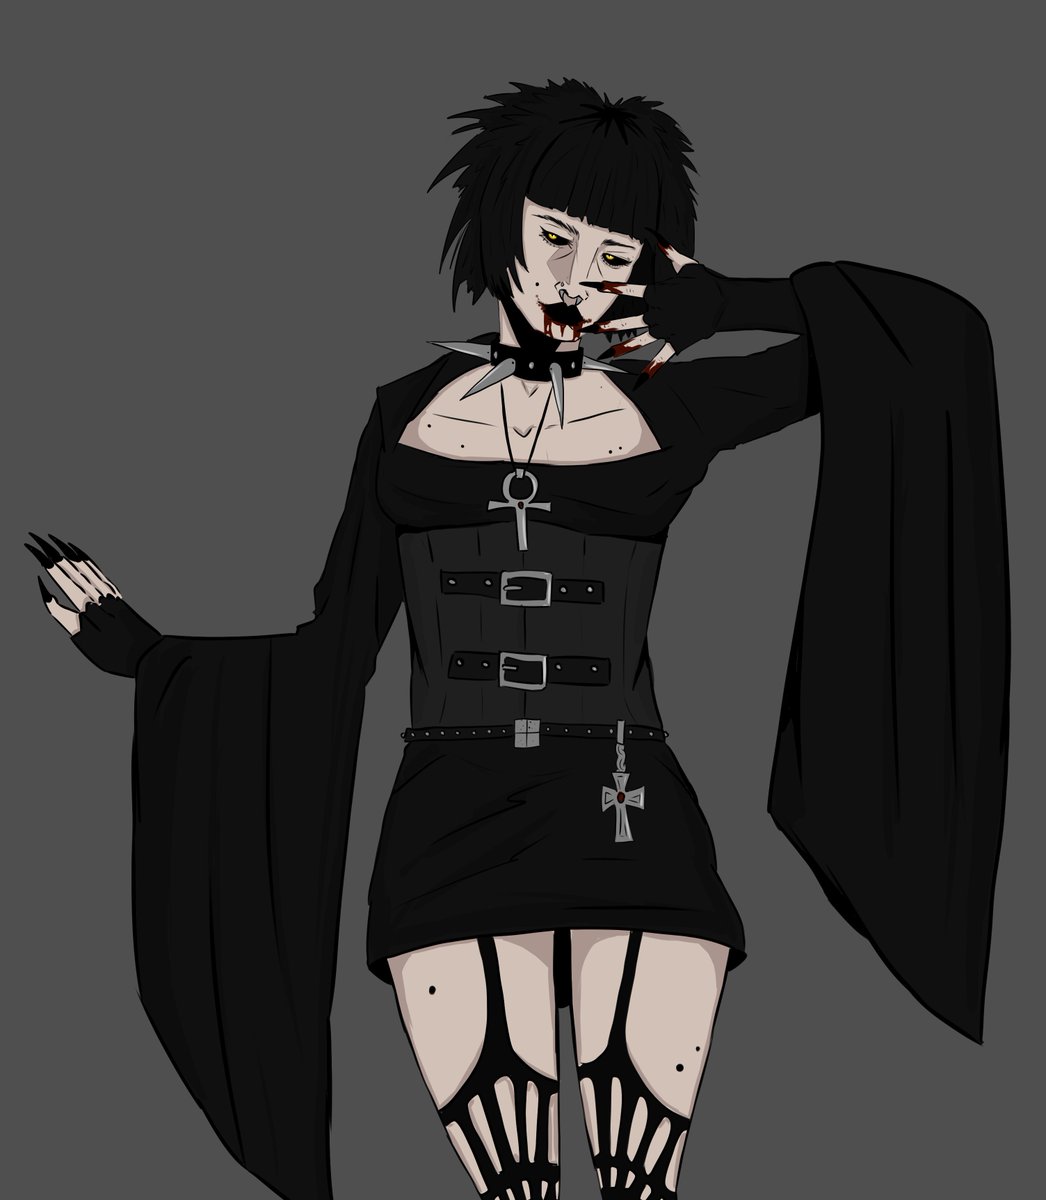 OC | Here she is, Drusilla from the clan Lasombra

#vampirethemasquerade